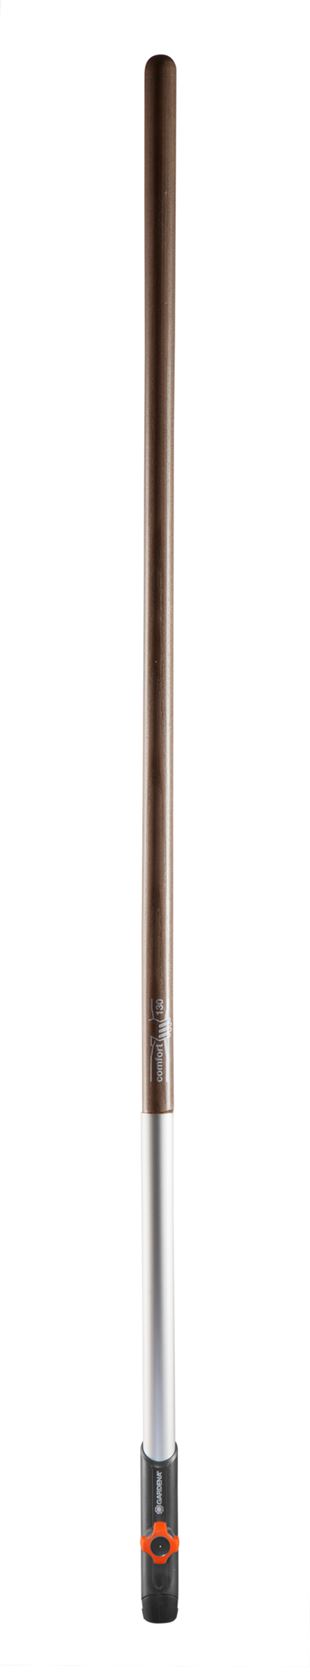 Gardena Combisystem wooden handles 150cm fsc 100%